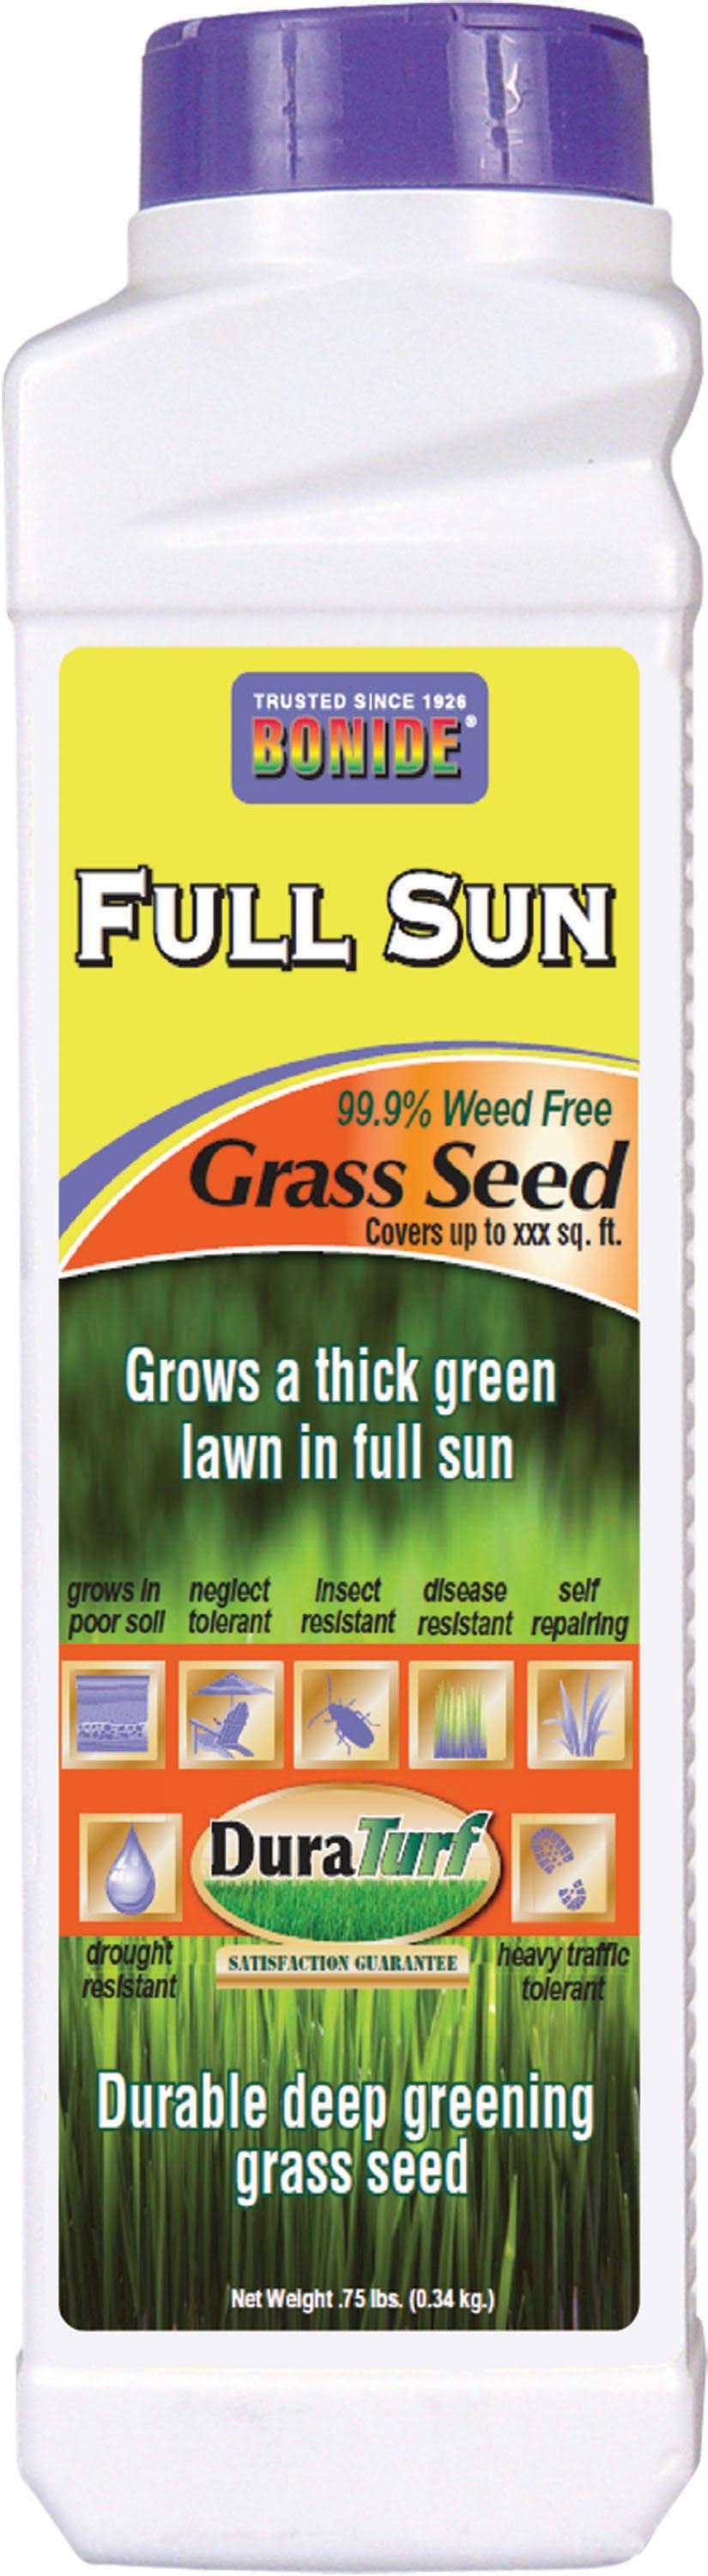 Bonide Full Sun Grass Seed - .75lbs